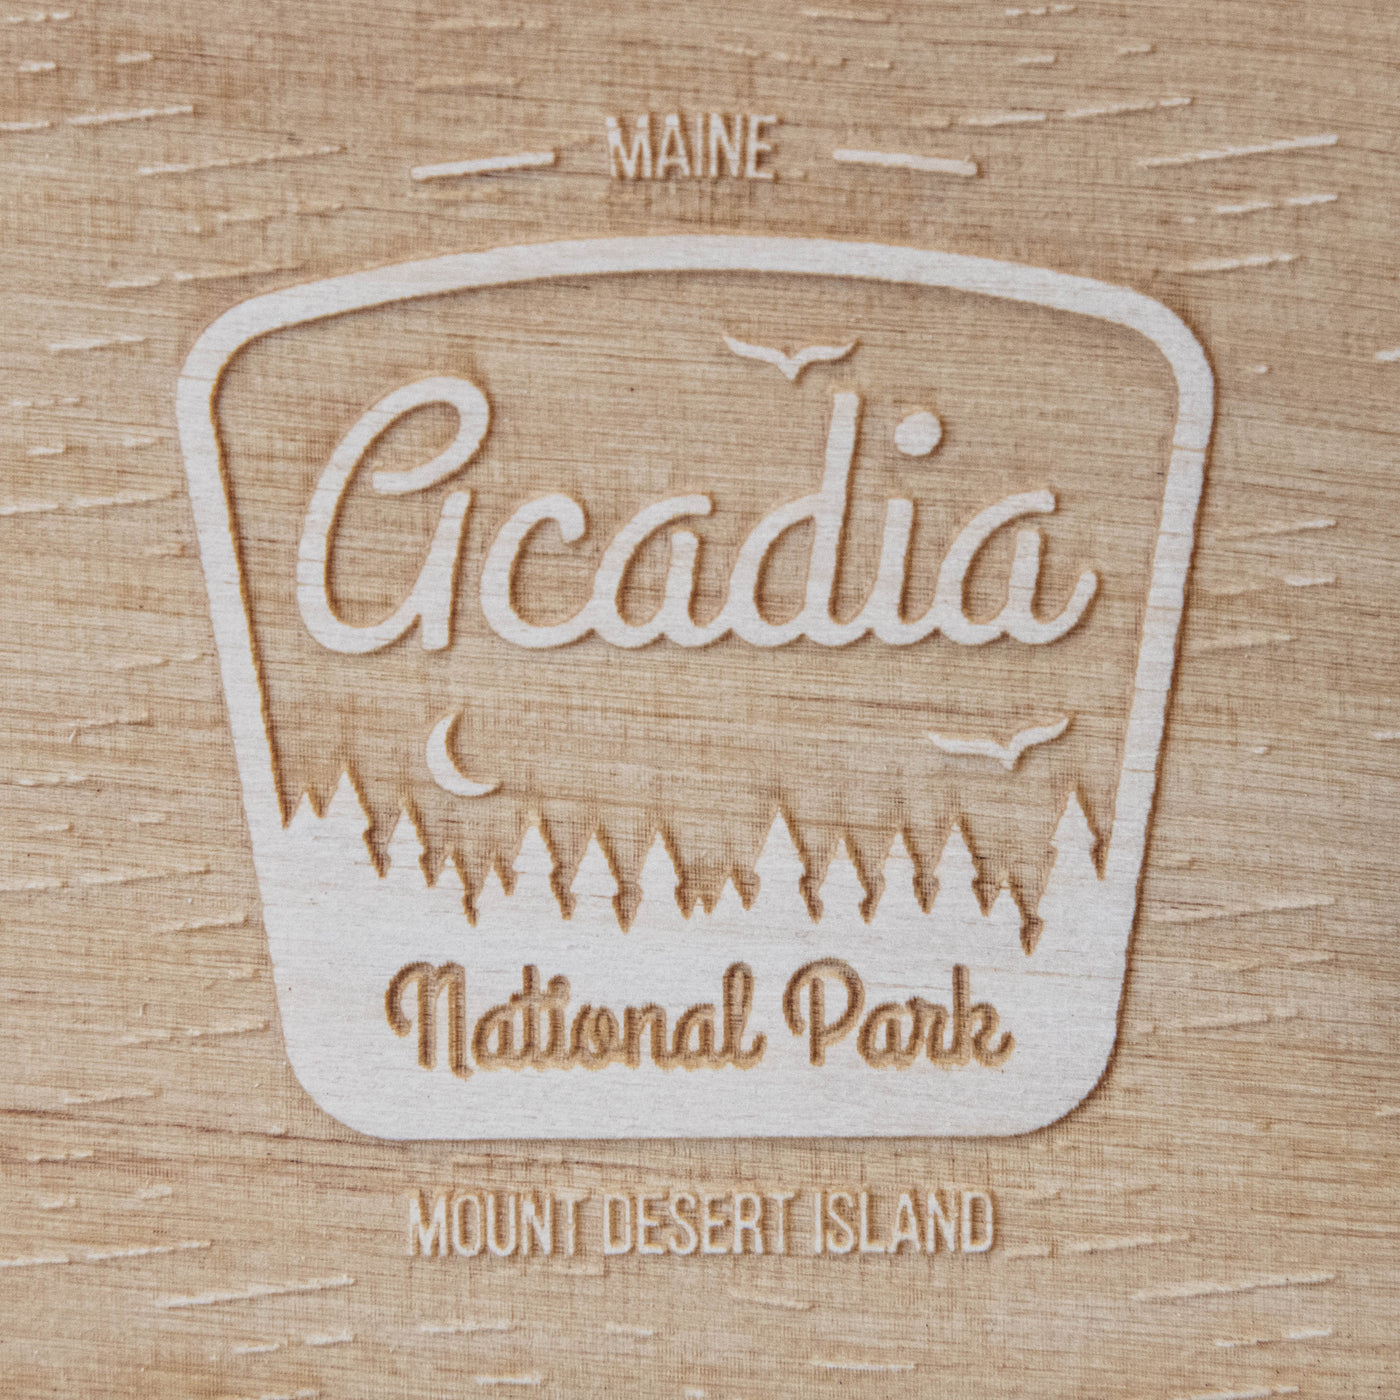 Acadia National Park, Mount Desert Island Maine Topographic Map